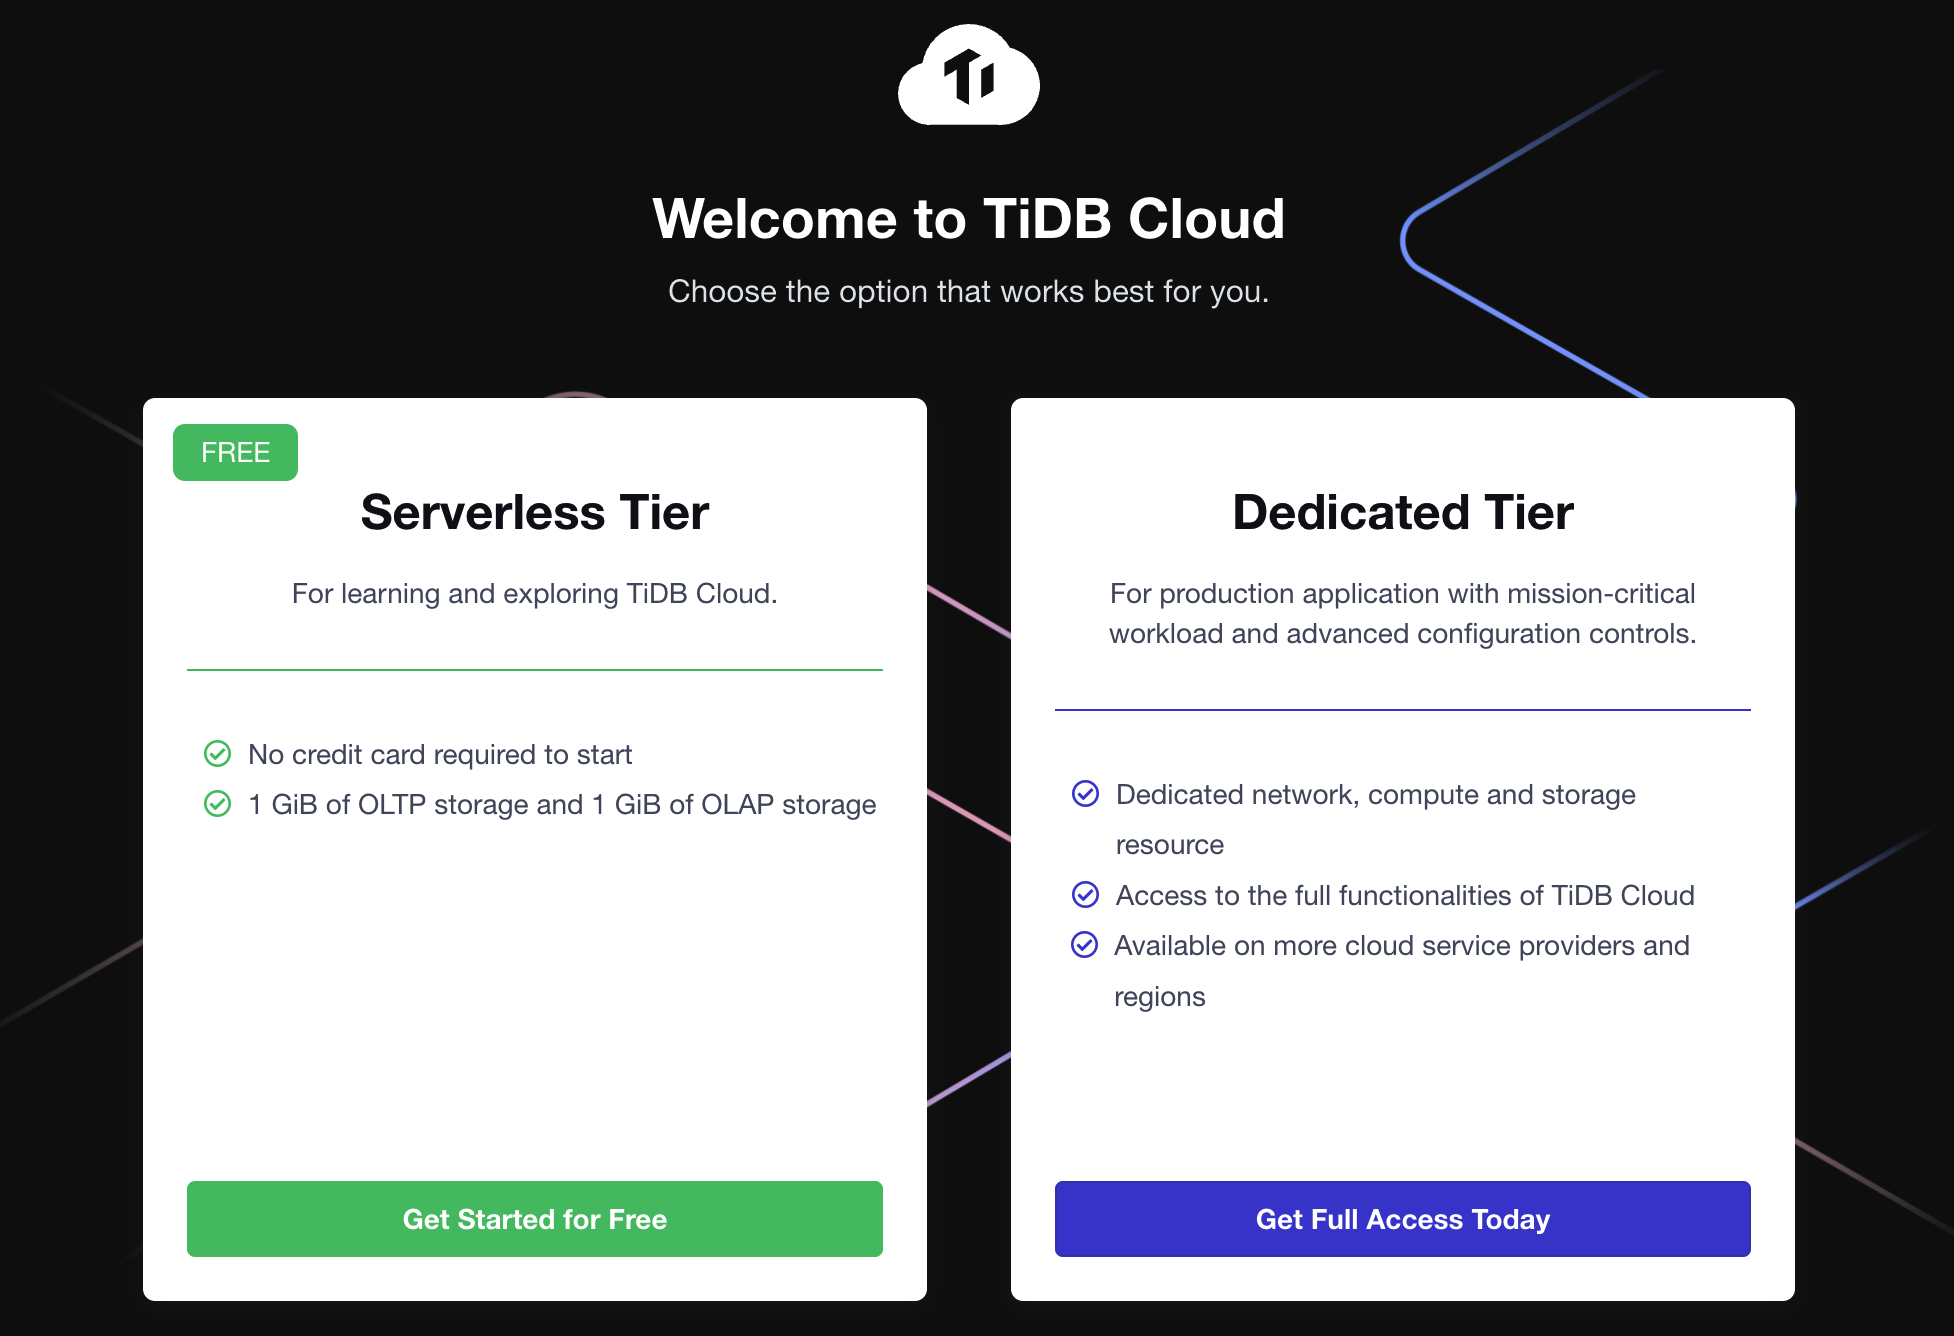 TiDB Cloud Serverless Tier 专为规模化交易、分析和混合工作负载以及流量激增的应用程序而构建,可以自动扩缩容以满足实时需求。开发人员只需点击几下,就可以部署和配置一个具备完整功能的 Serverless TiDB 数据库。TiDB Cloud Serverless 与 MySQL 高度兼容,开发人员可以继续使用他们熟悉的 MySQL 开发框架和工具。